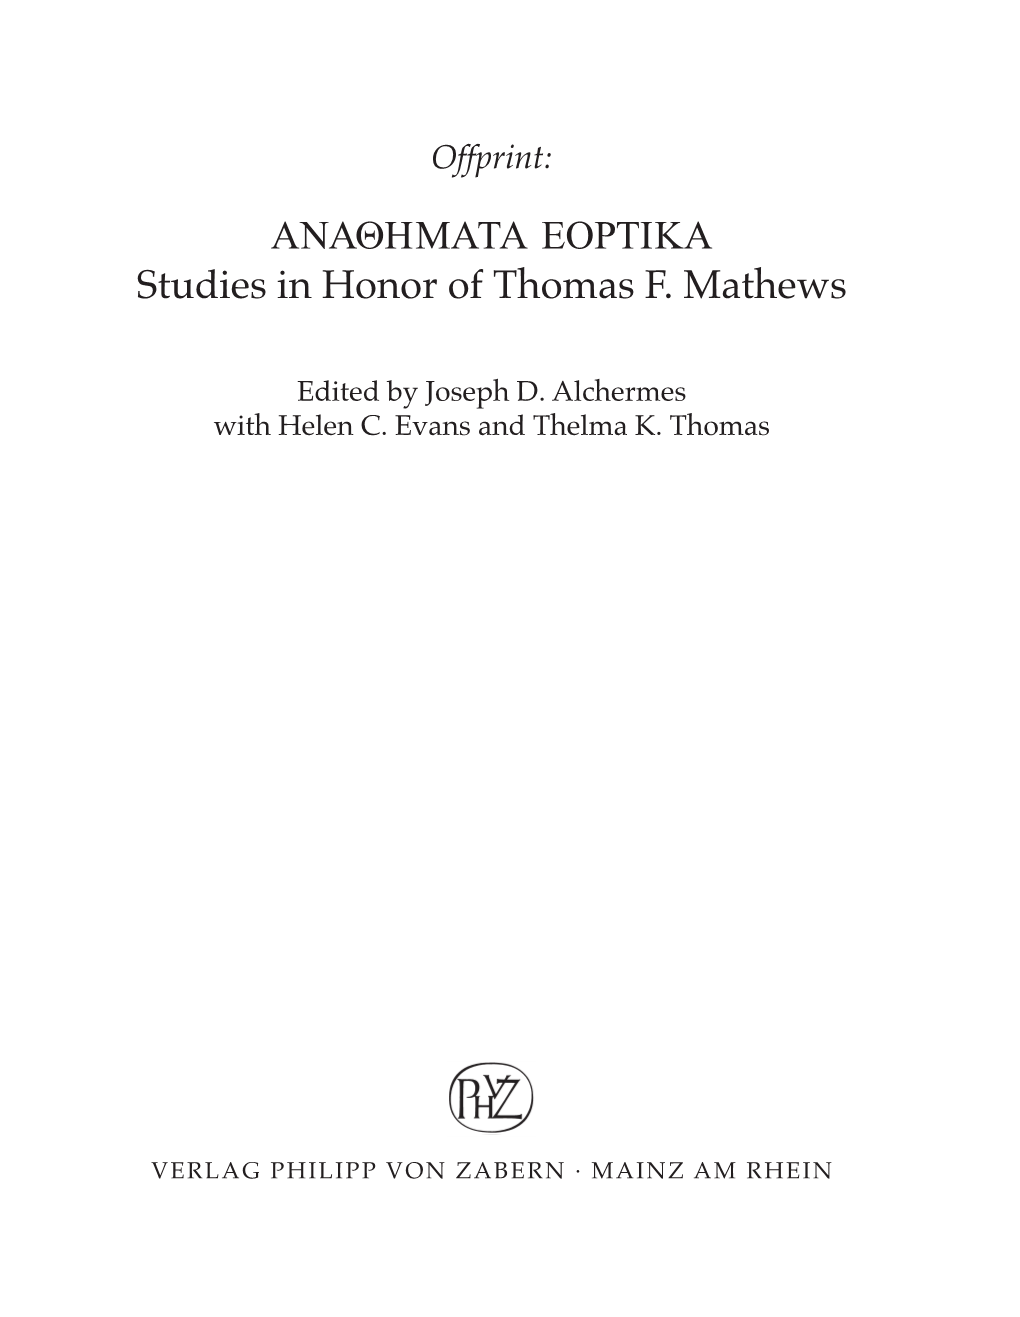 ANAVHMATA EORTIKA Studies in Honor of Thomas F. Mathews